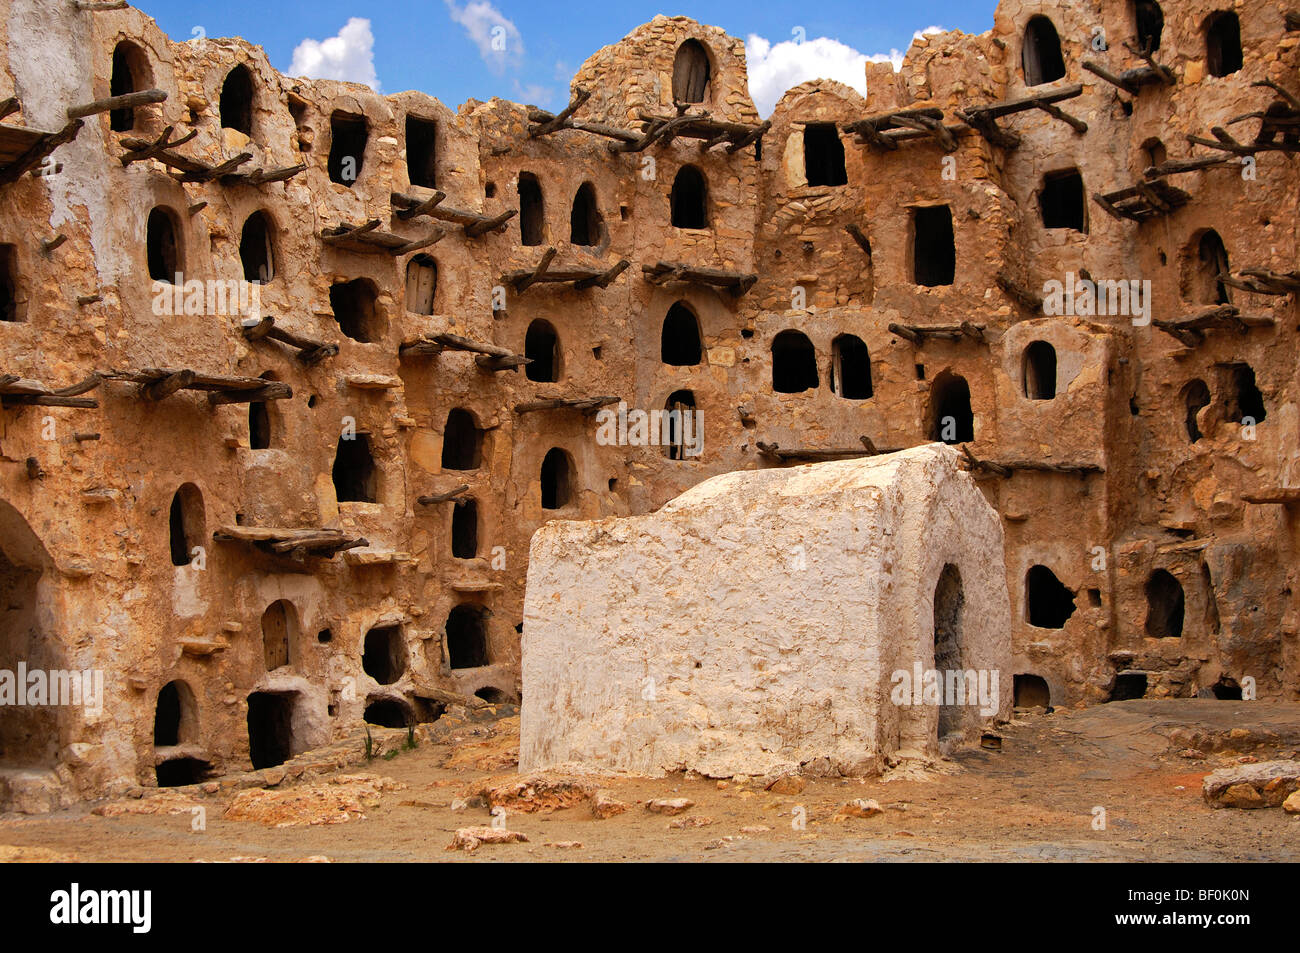 Simple mosque in the inner courtyard of the fortified Berber granary Qasr al-Haj, Nafusa Mountains, Libya Stock Photo